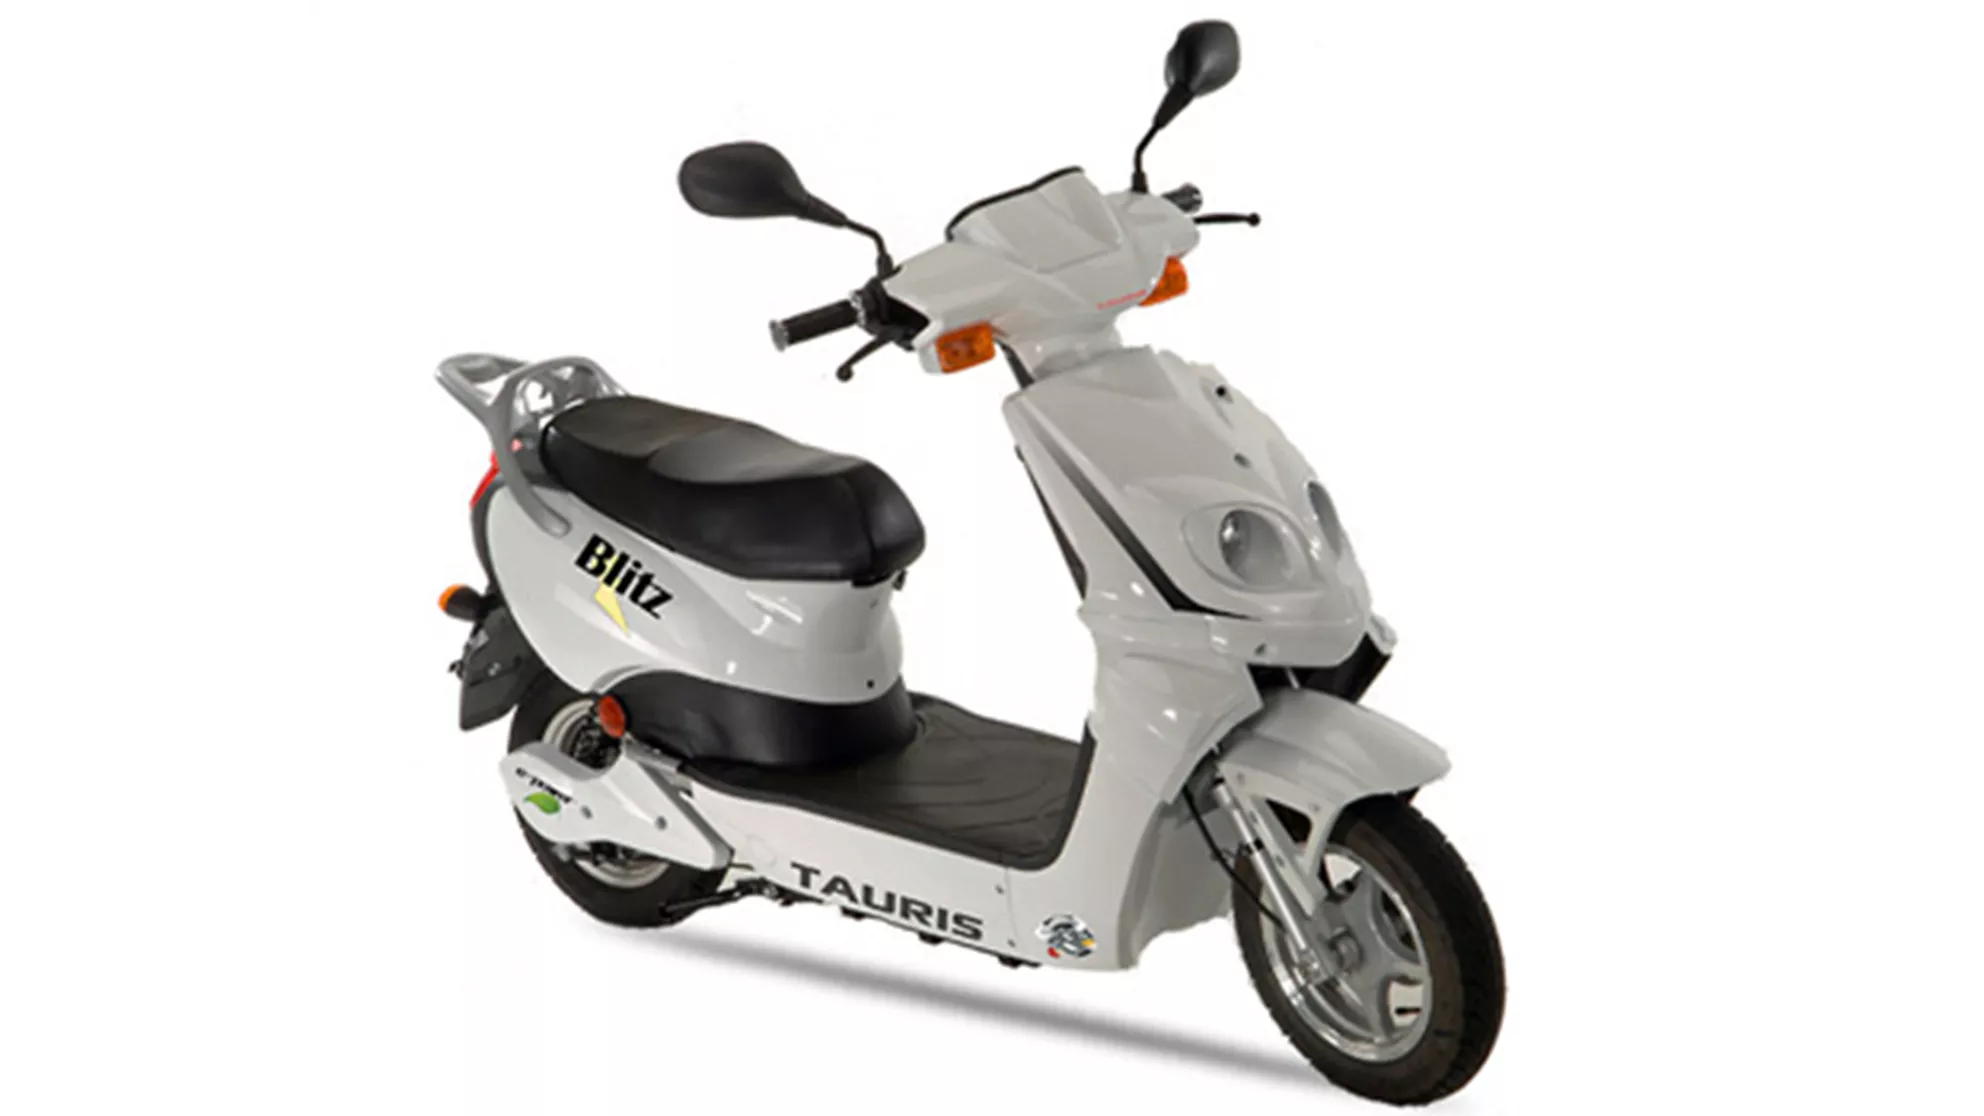 Tauris Blitz e-scooter - Image 1